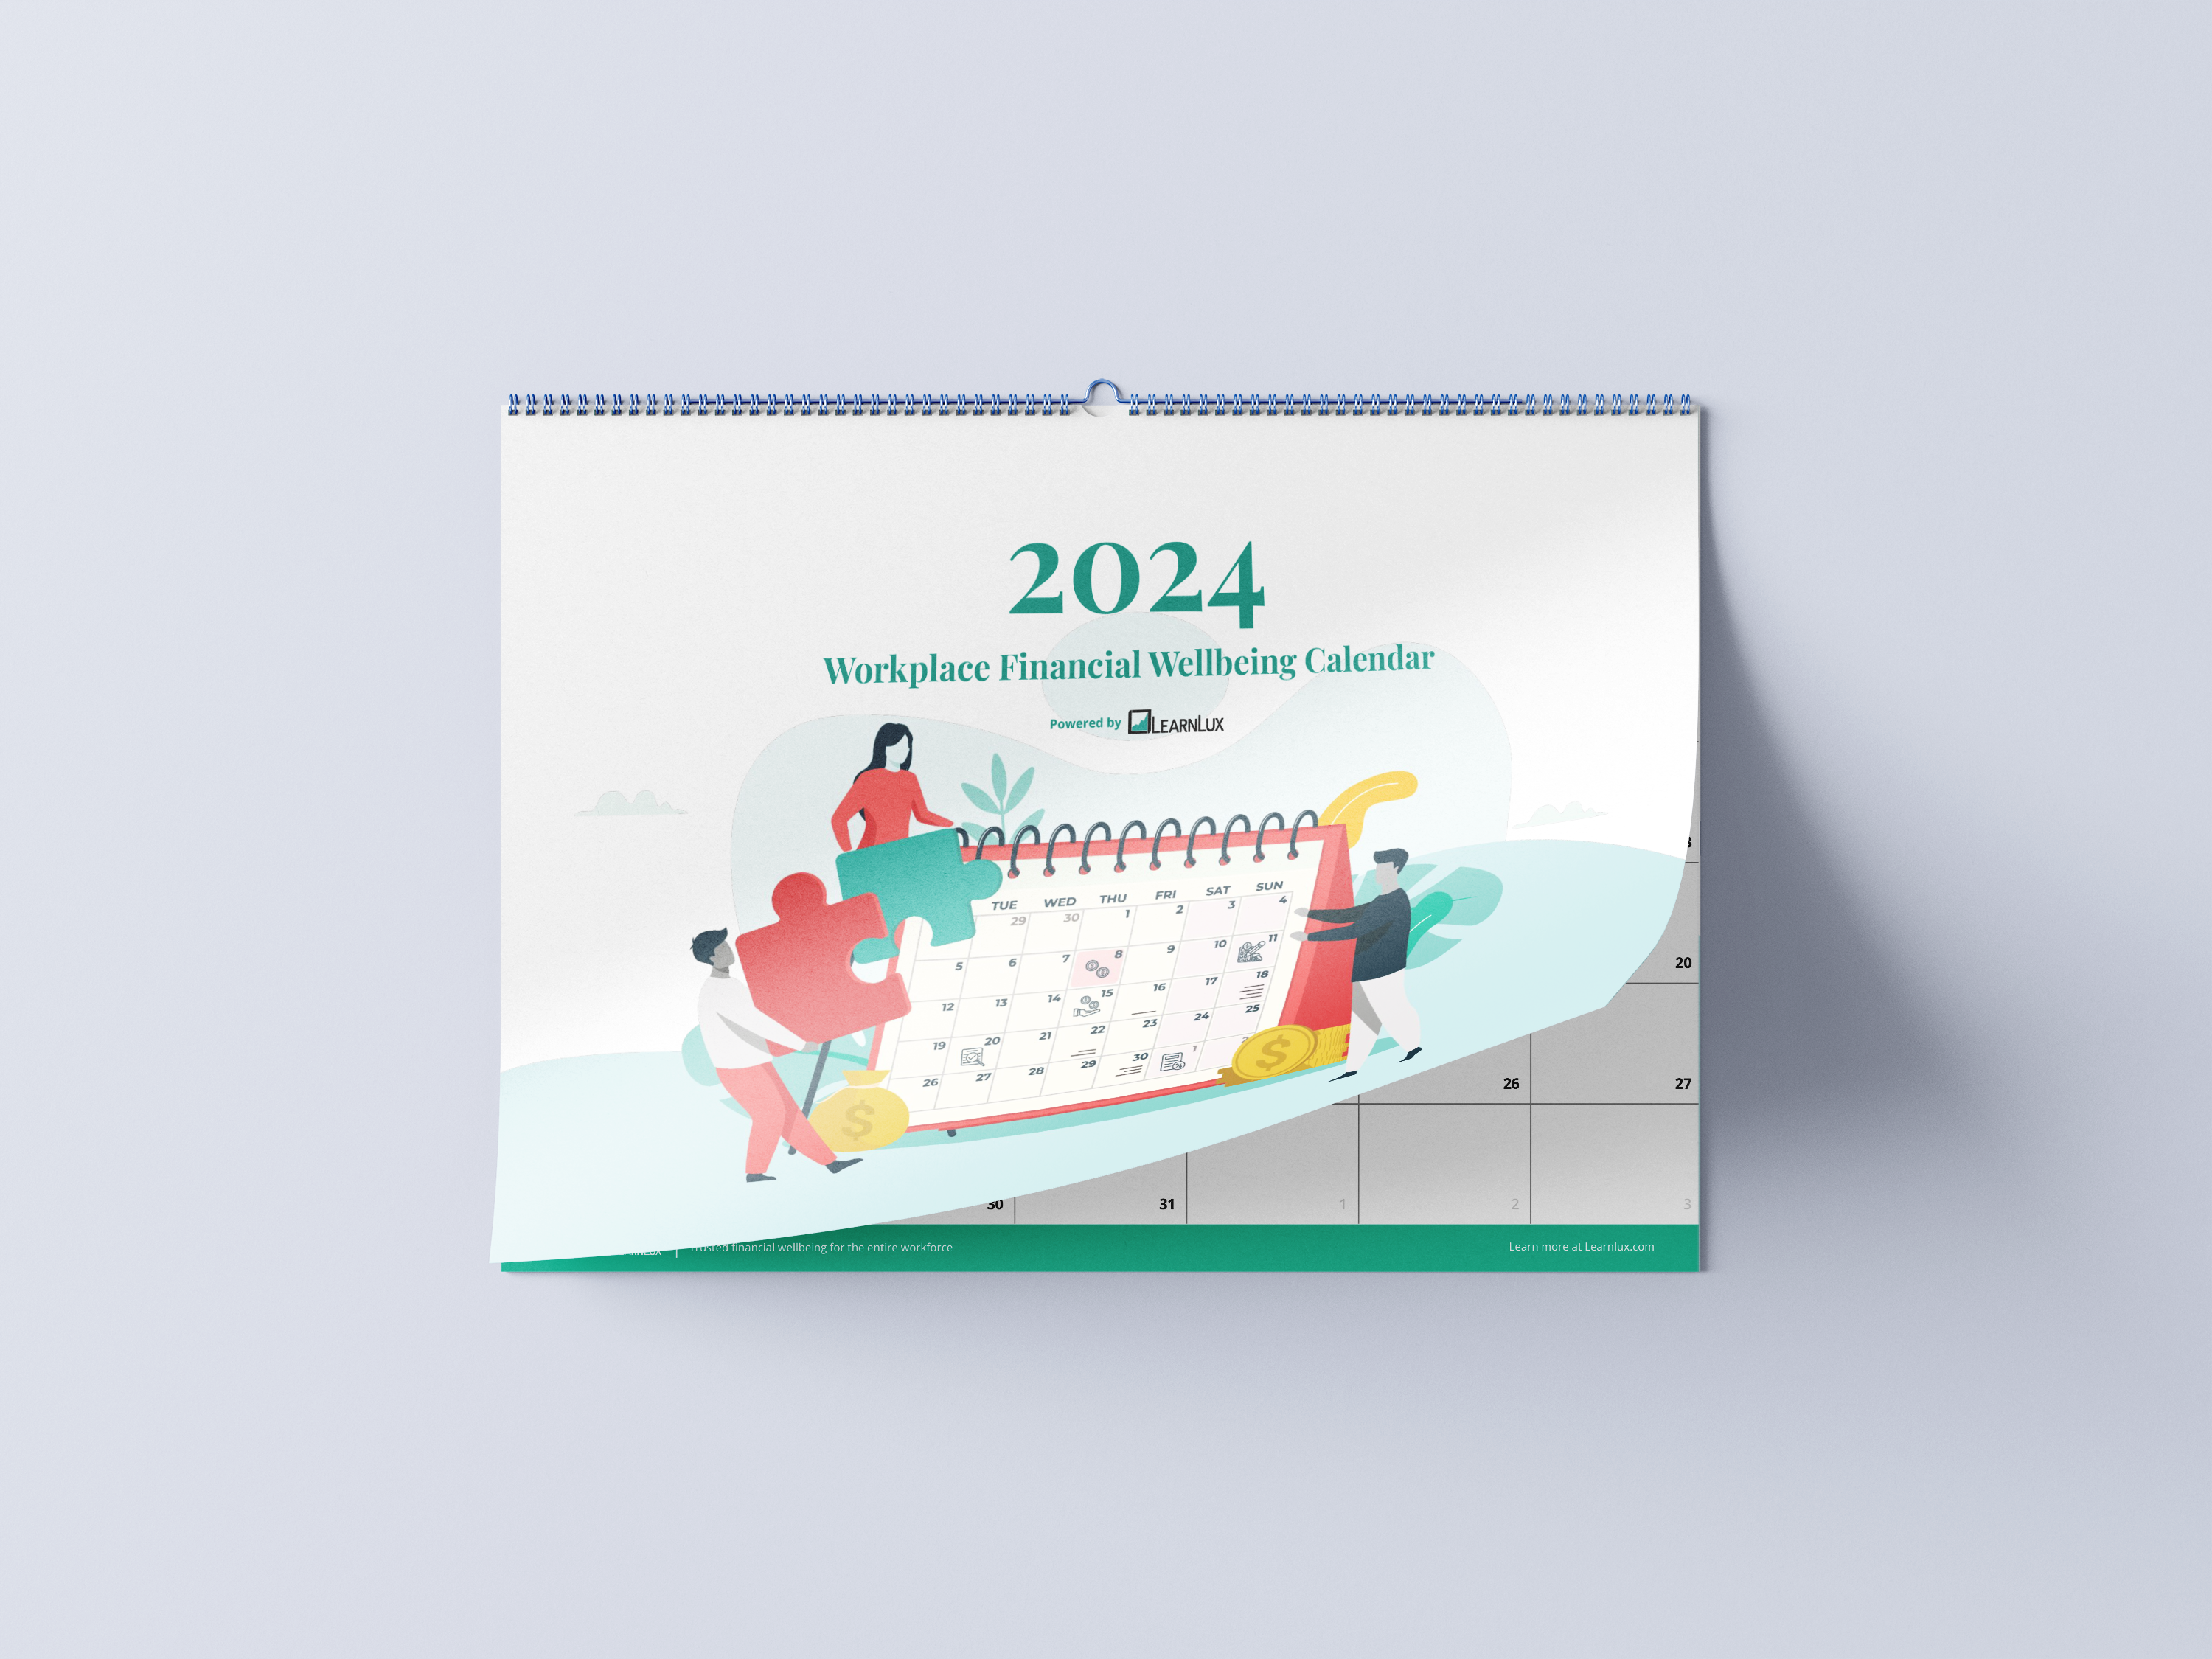 2023 workplace financial wellbeing calendar